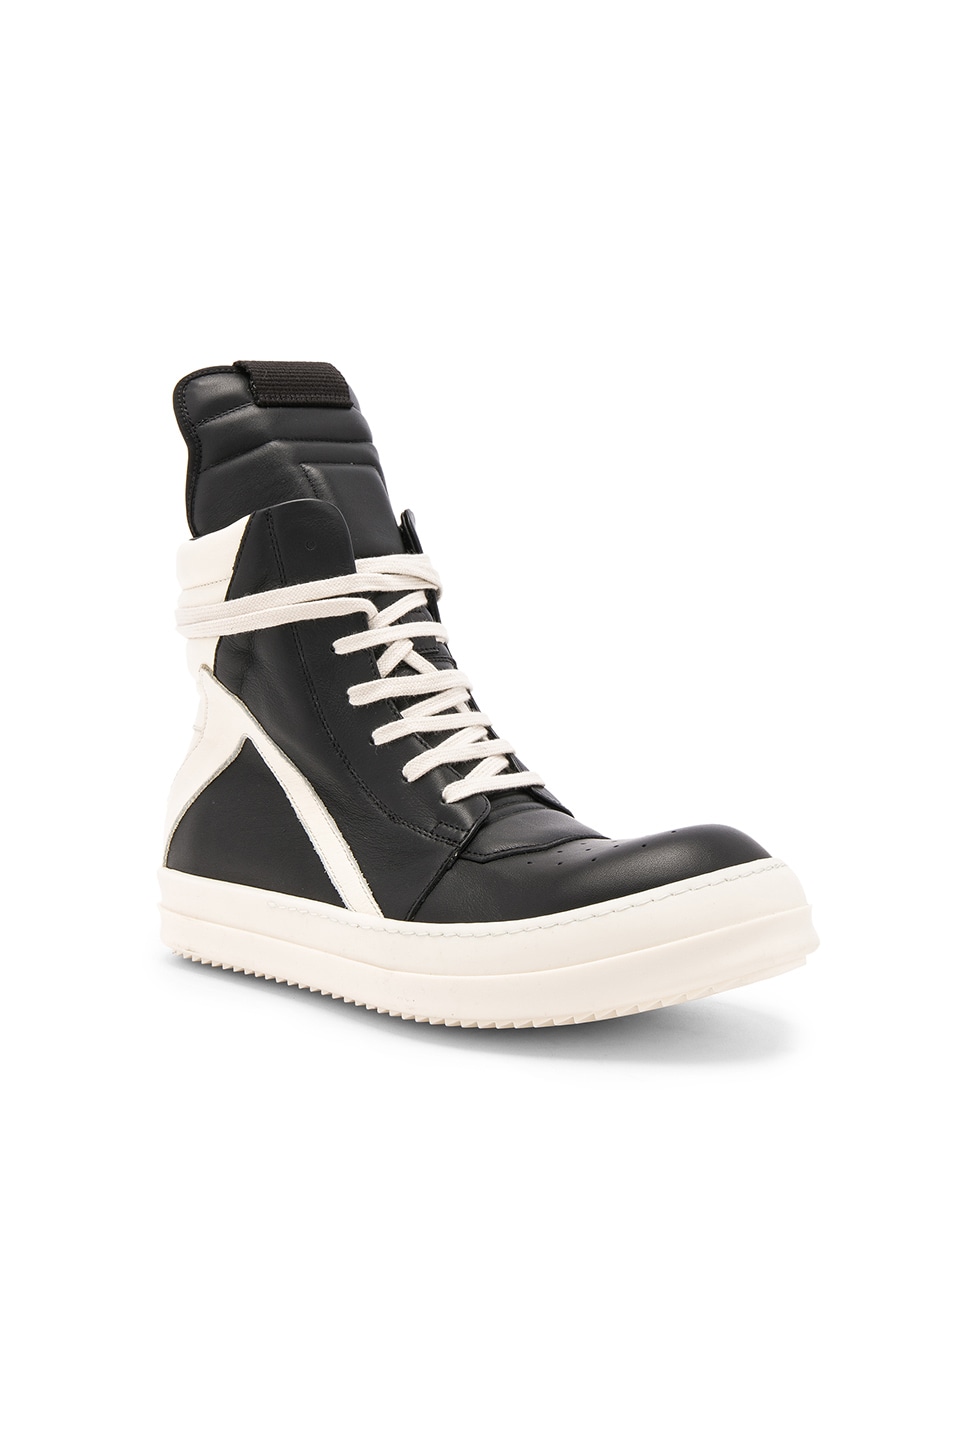 Image 1 of Rick Owens Leather Geobasket Sneakers in Black & White